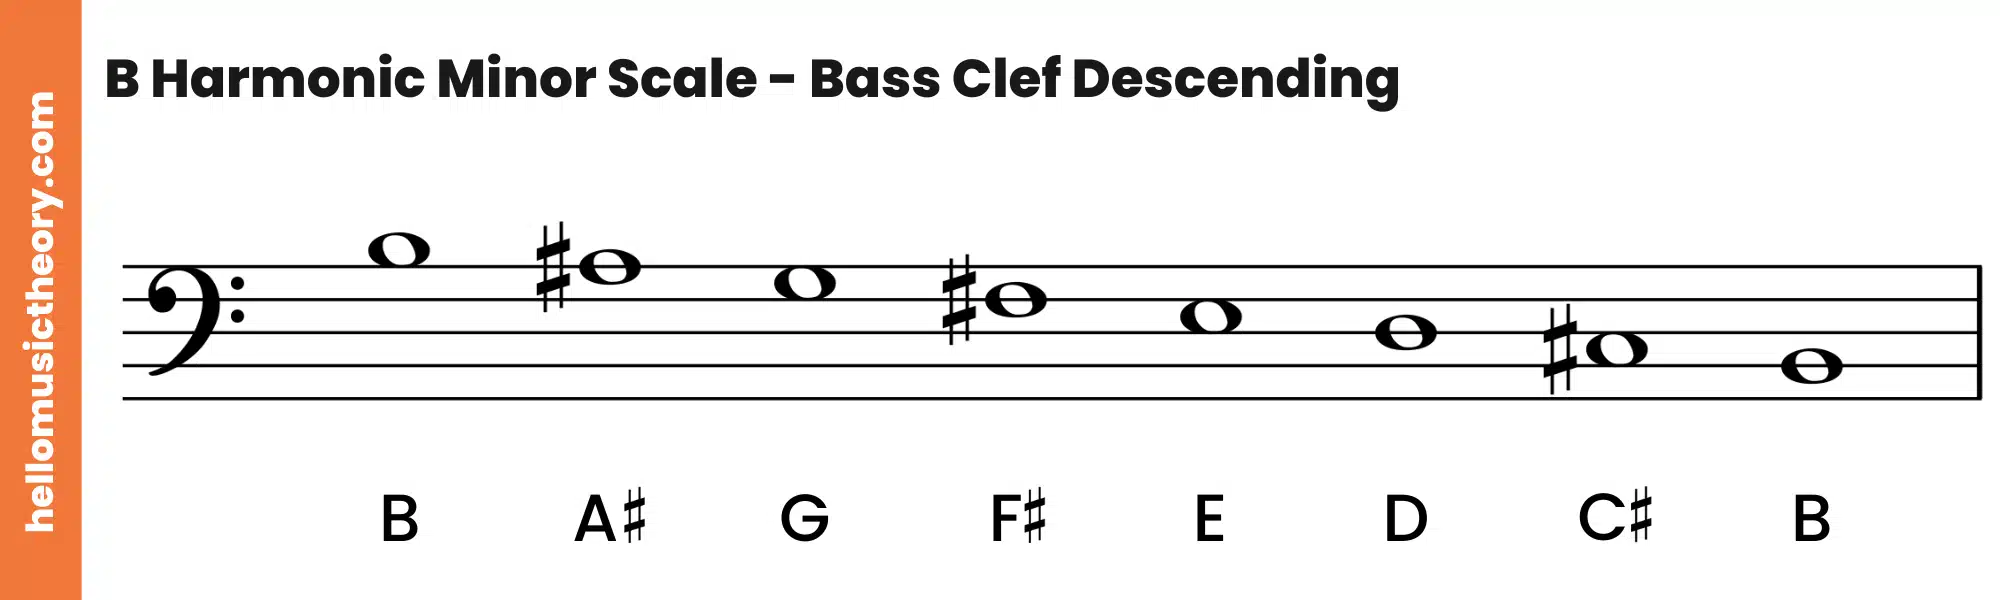 B Harmonic Minor Scale Bass Clef Descending